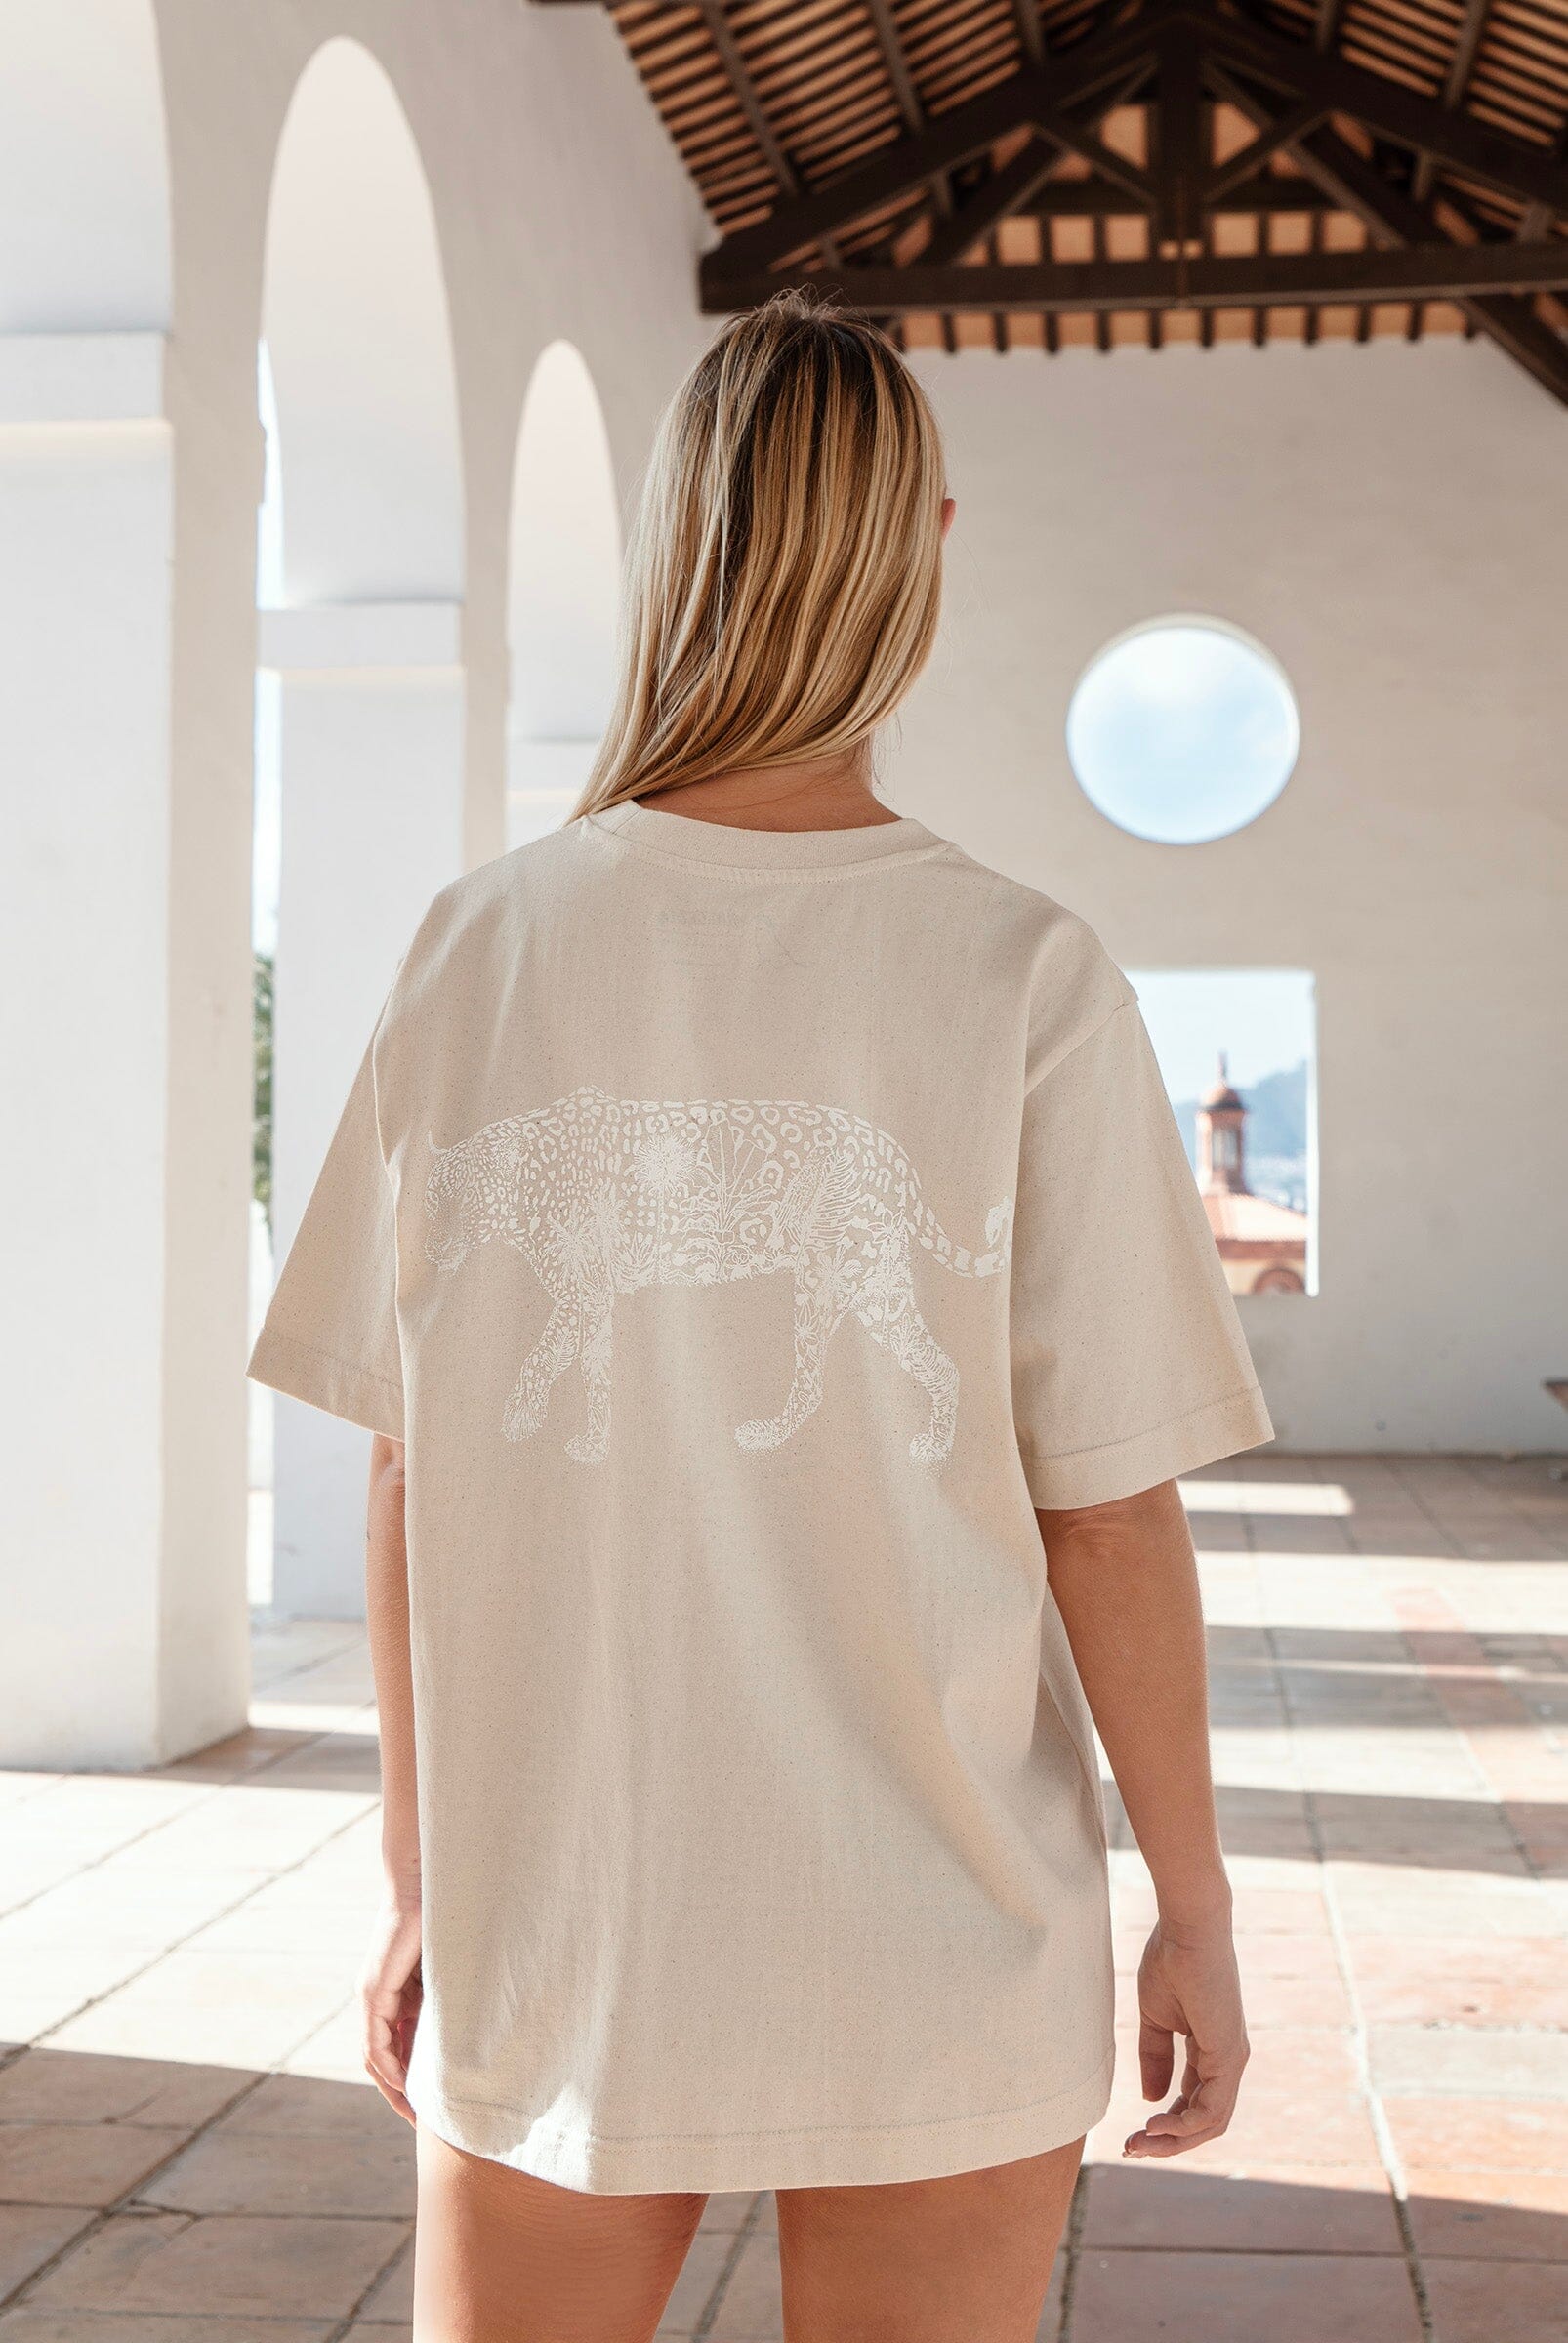 Women's Oversized T-Shirt | Jungle x Embroidered Wolf